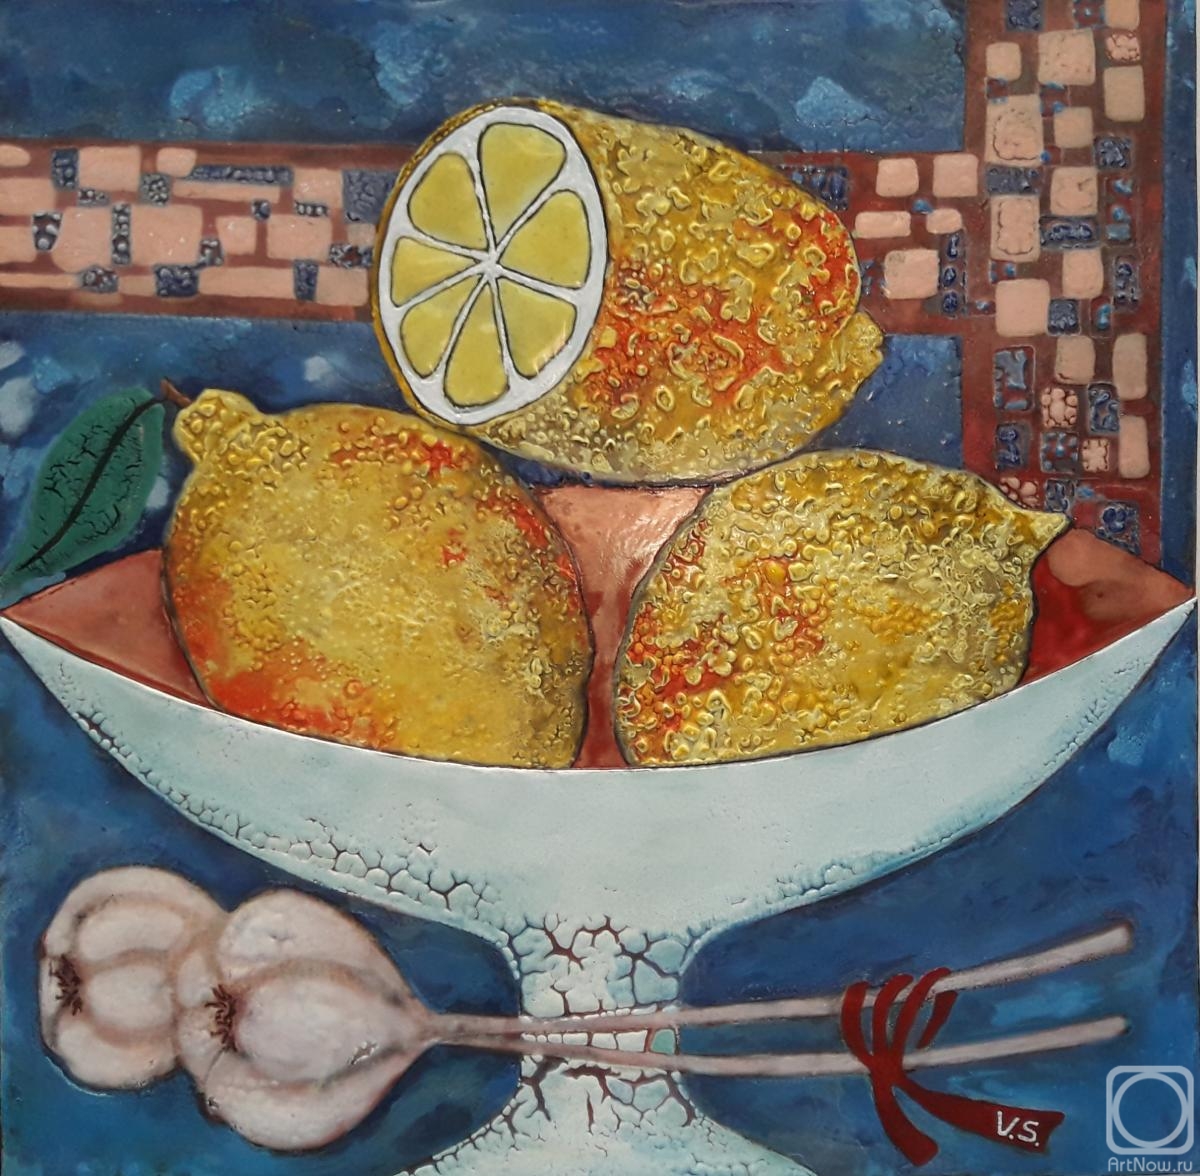 Sipovich Vladimir. Garlic and lemons